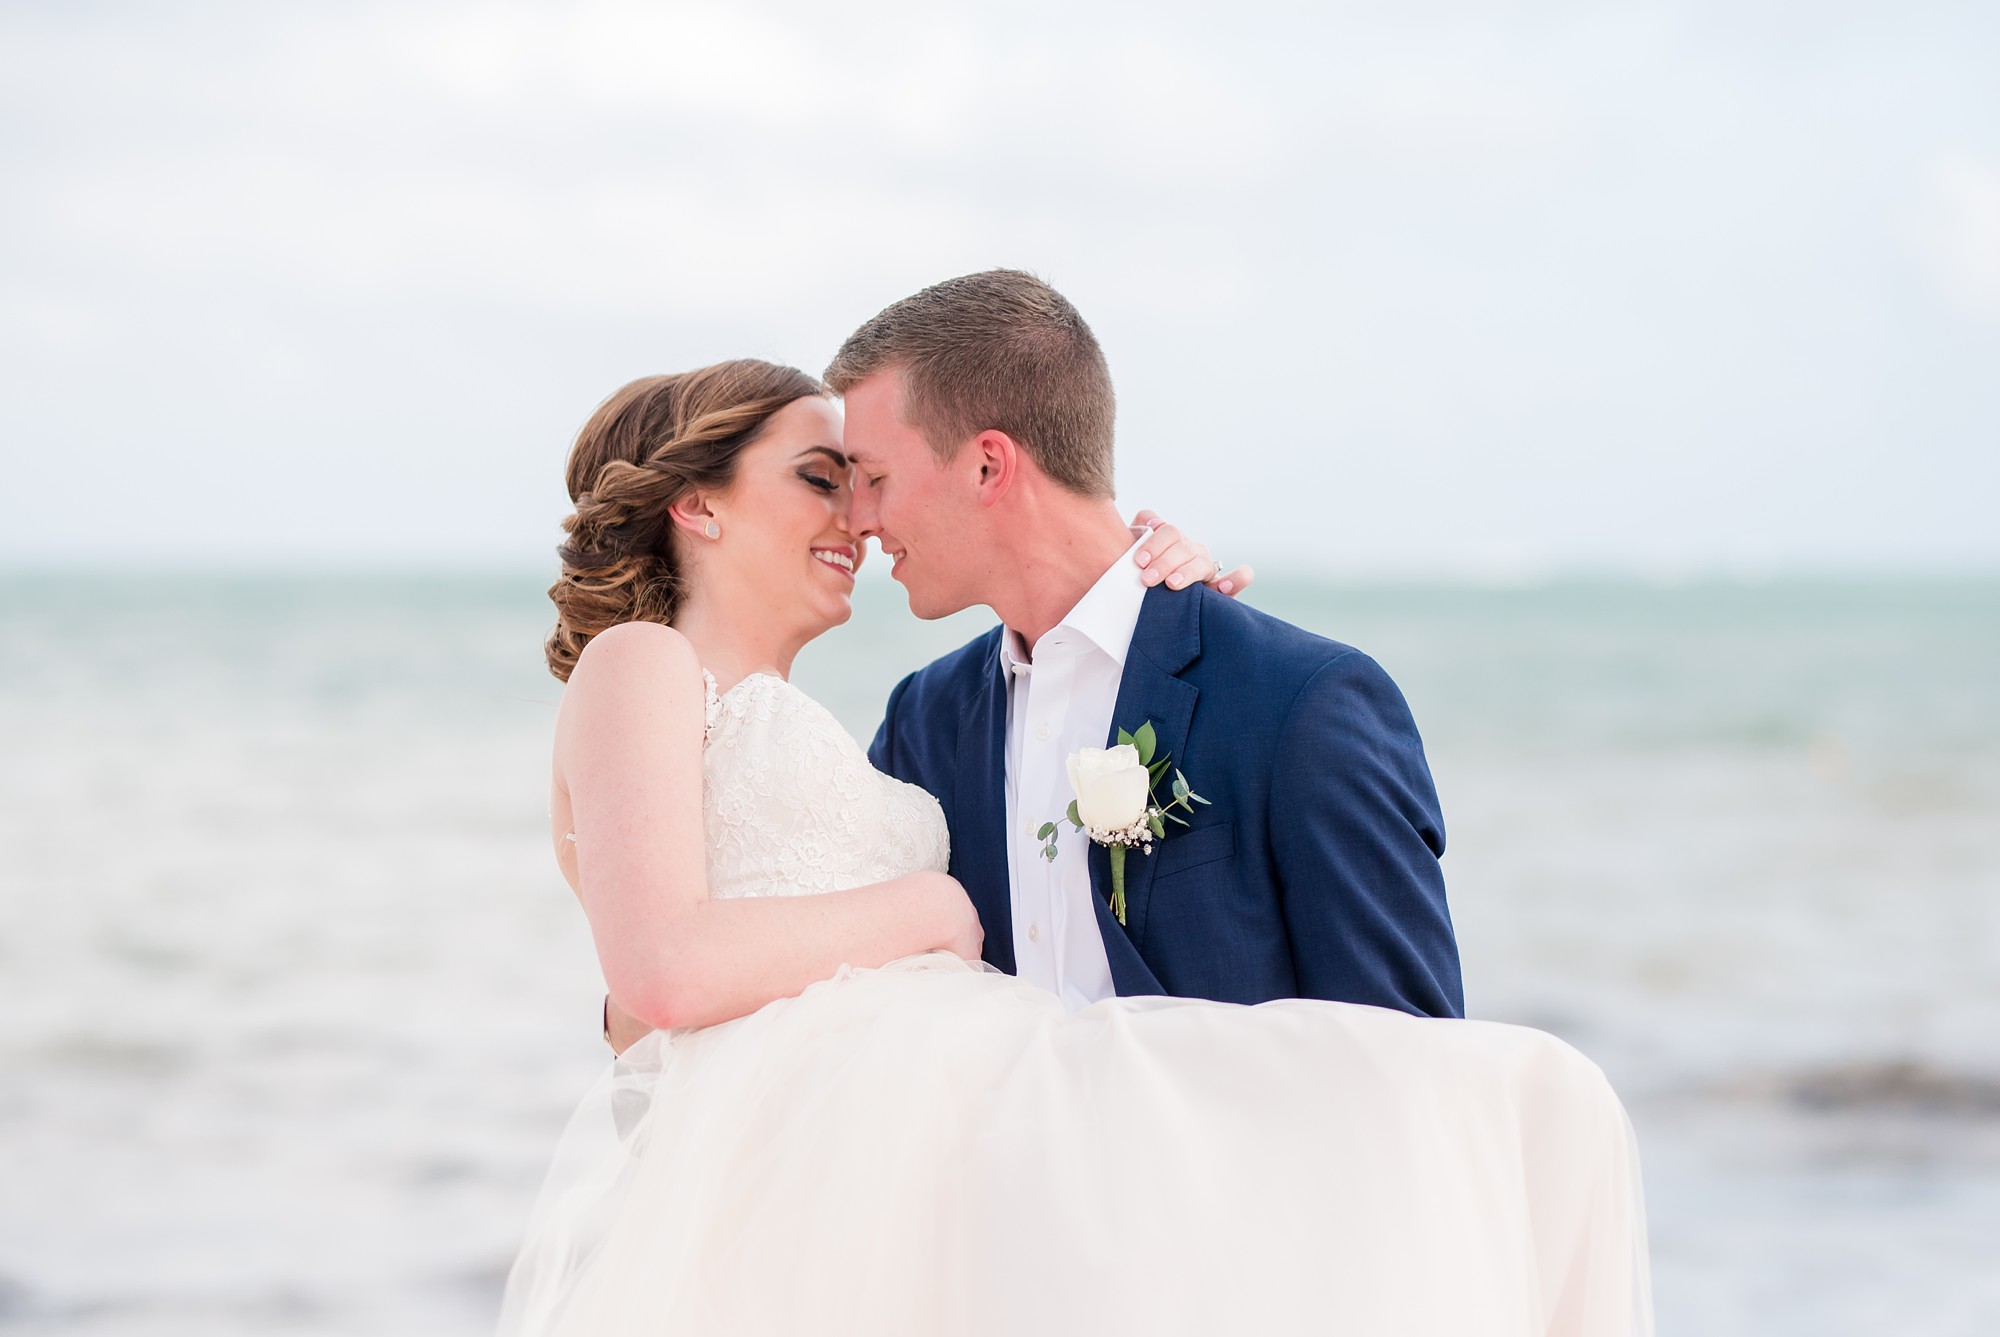 Dallas Destination Wedding Photography in Cancun Mexico